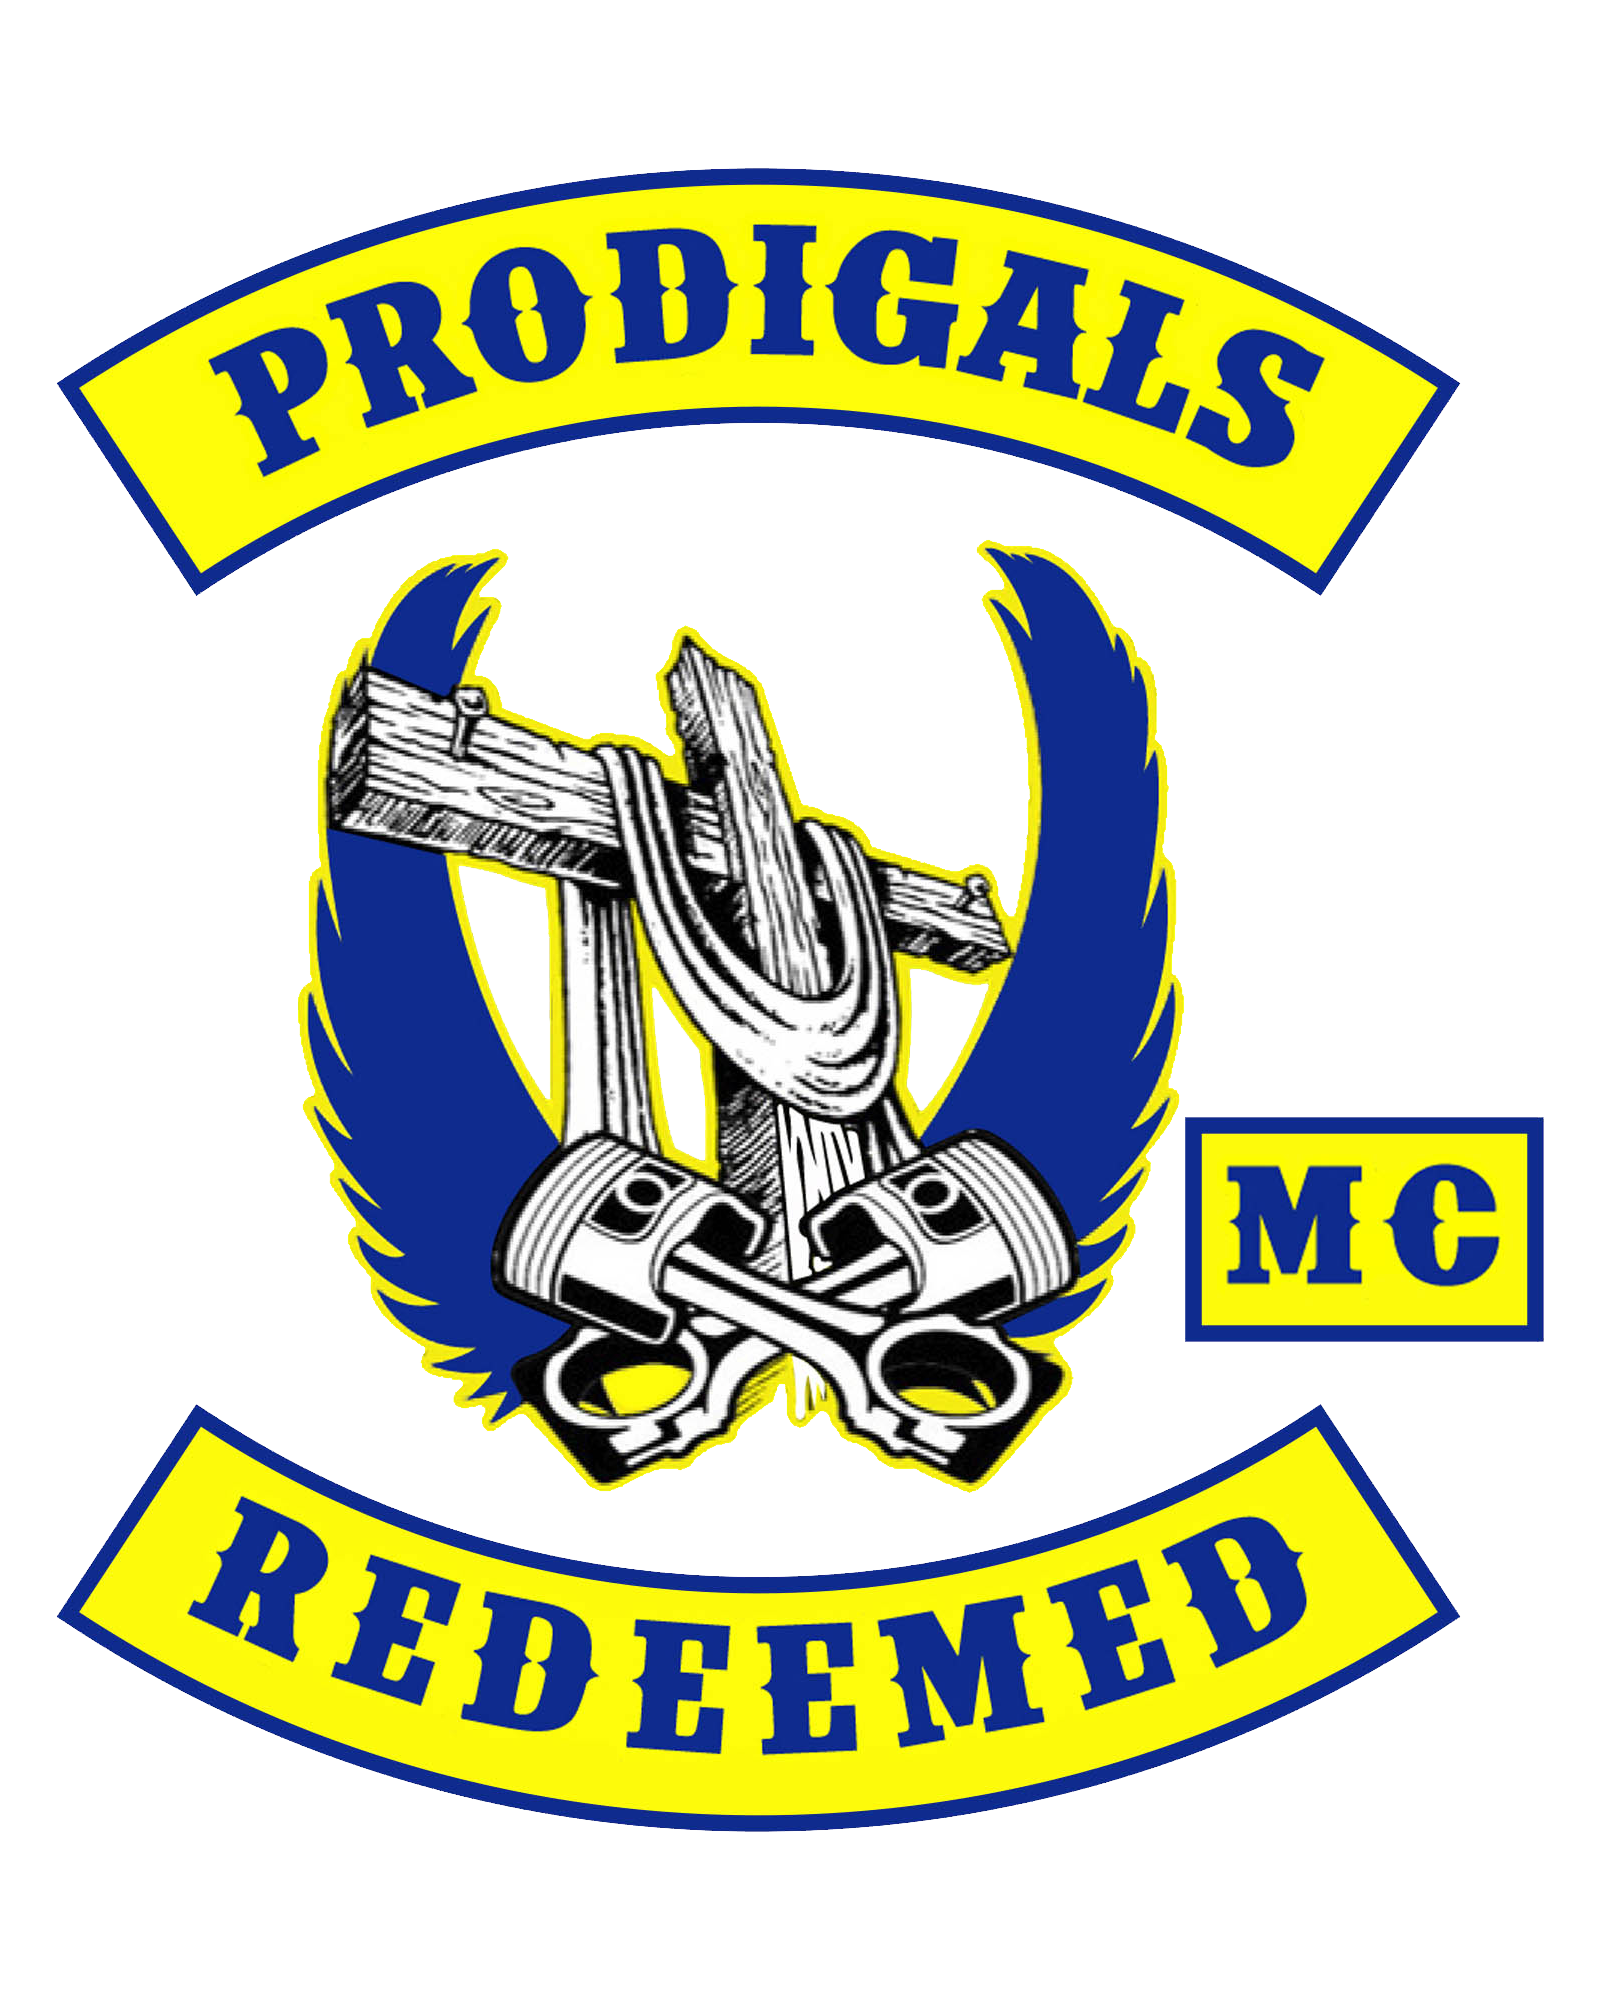 Prodigals MC